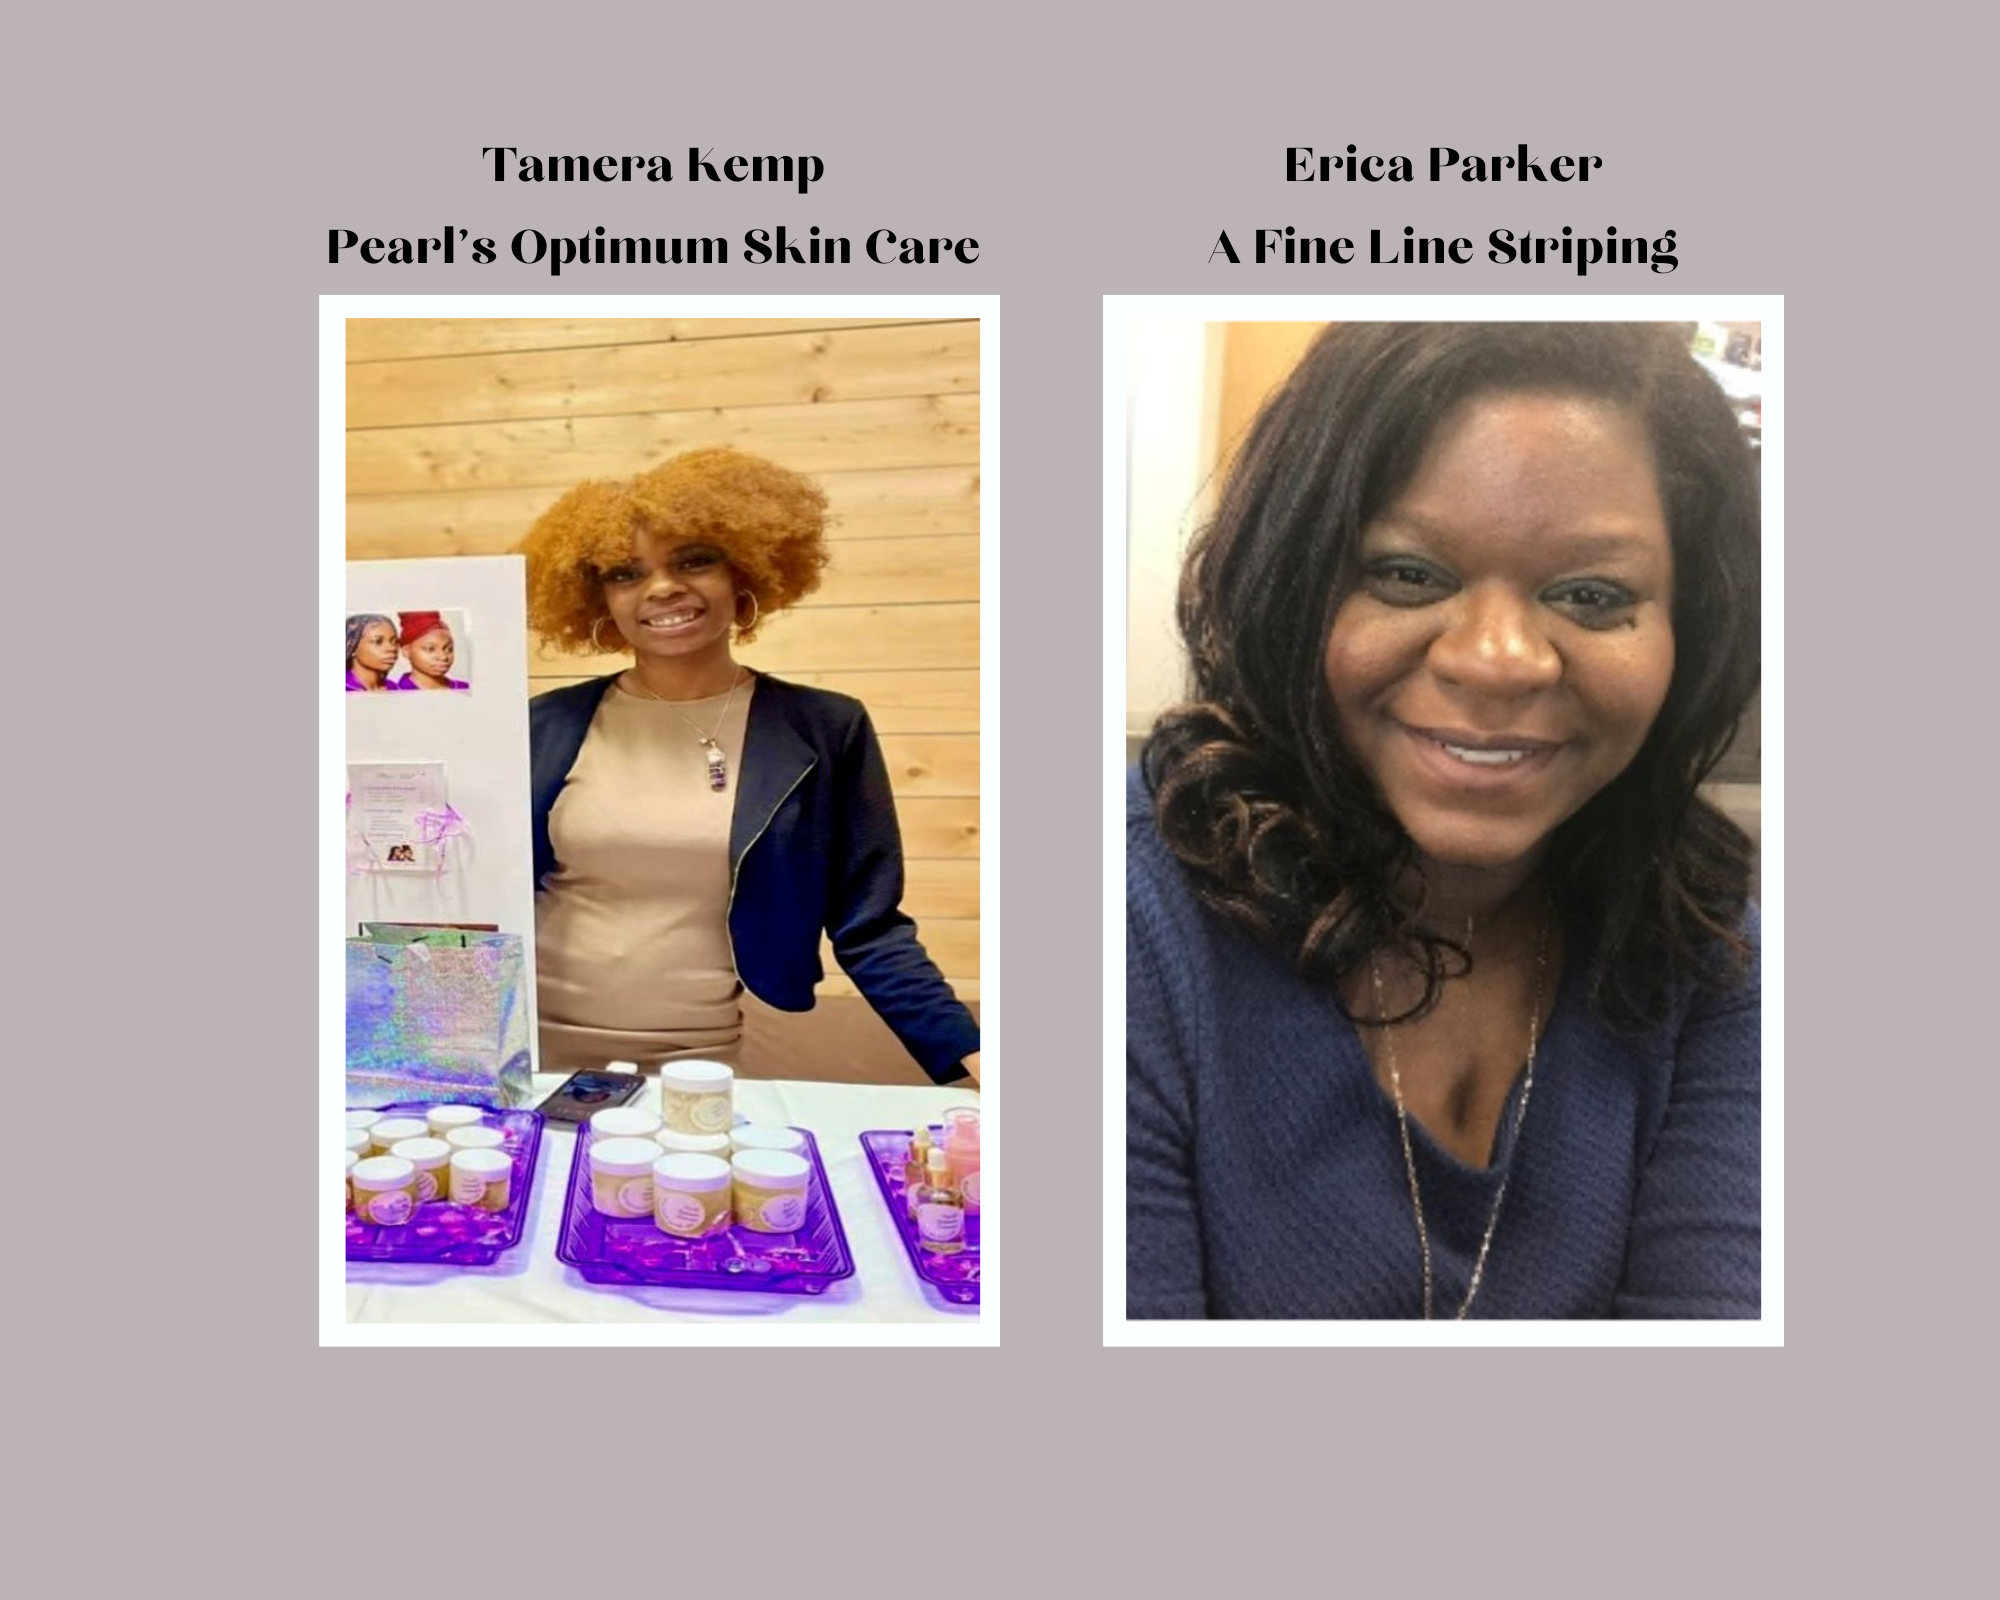 Tamera Kemp owner of Pearls Optimum Skin Care & Erica Parker owner of A Fine Line Striping